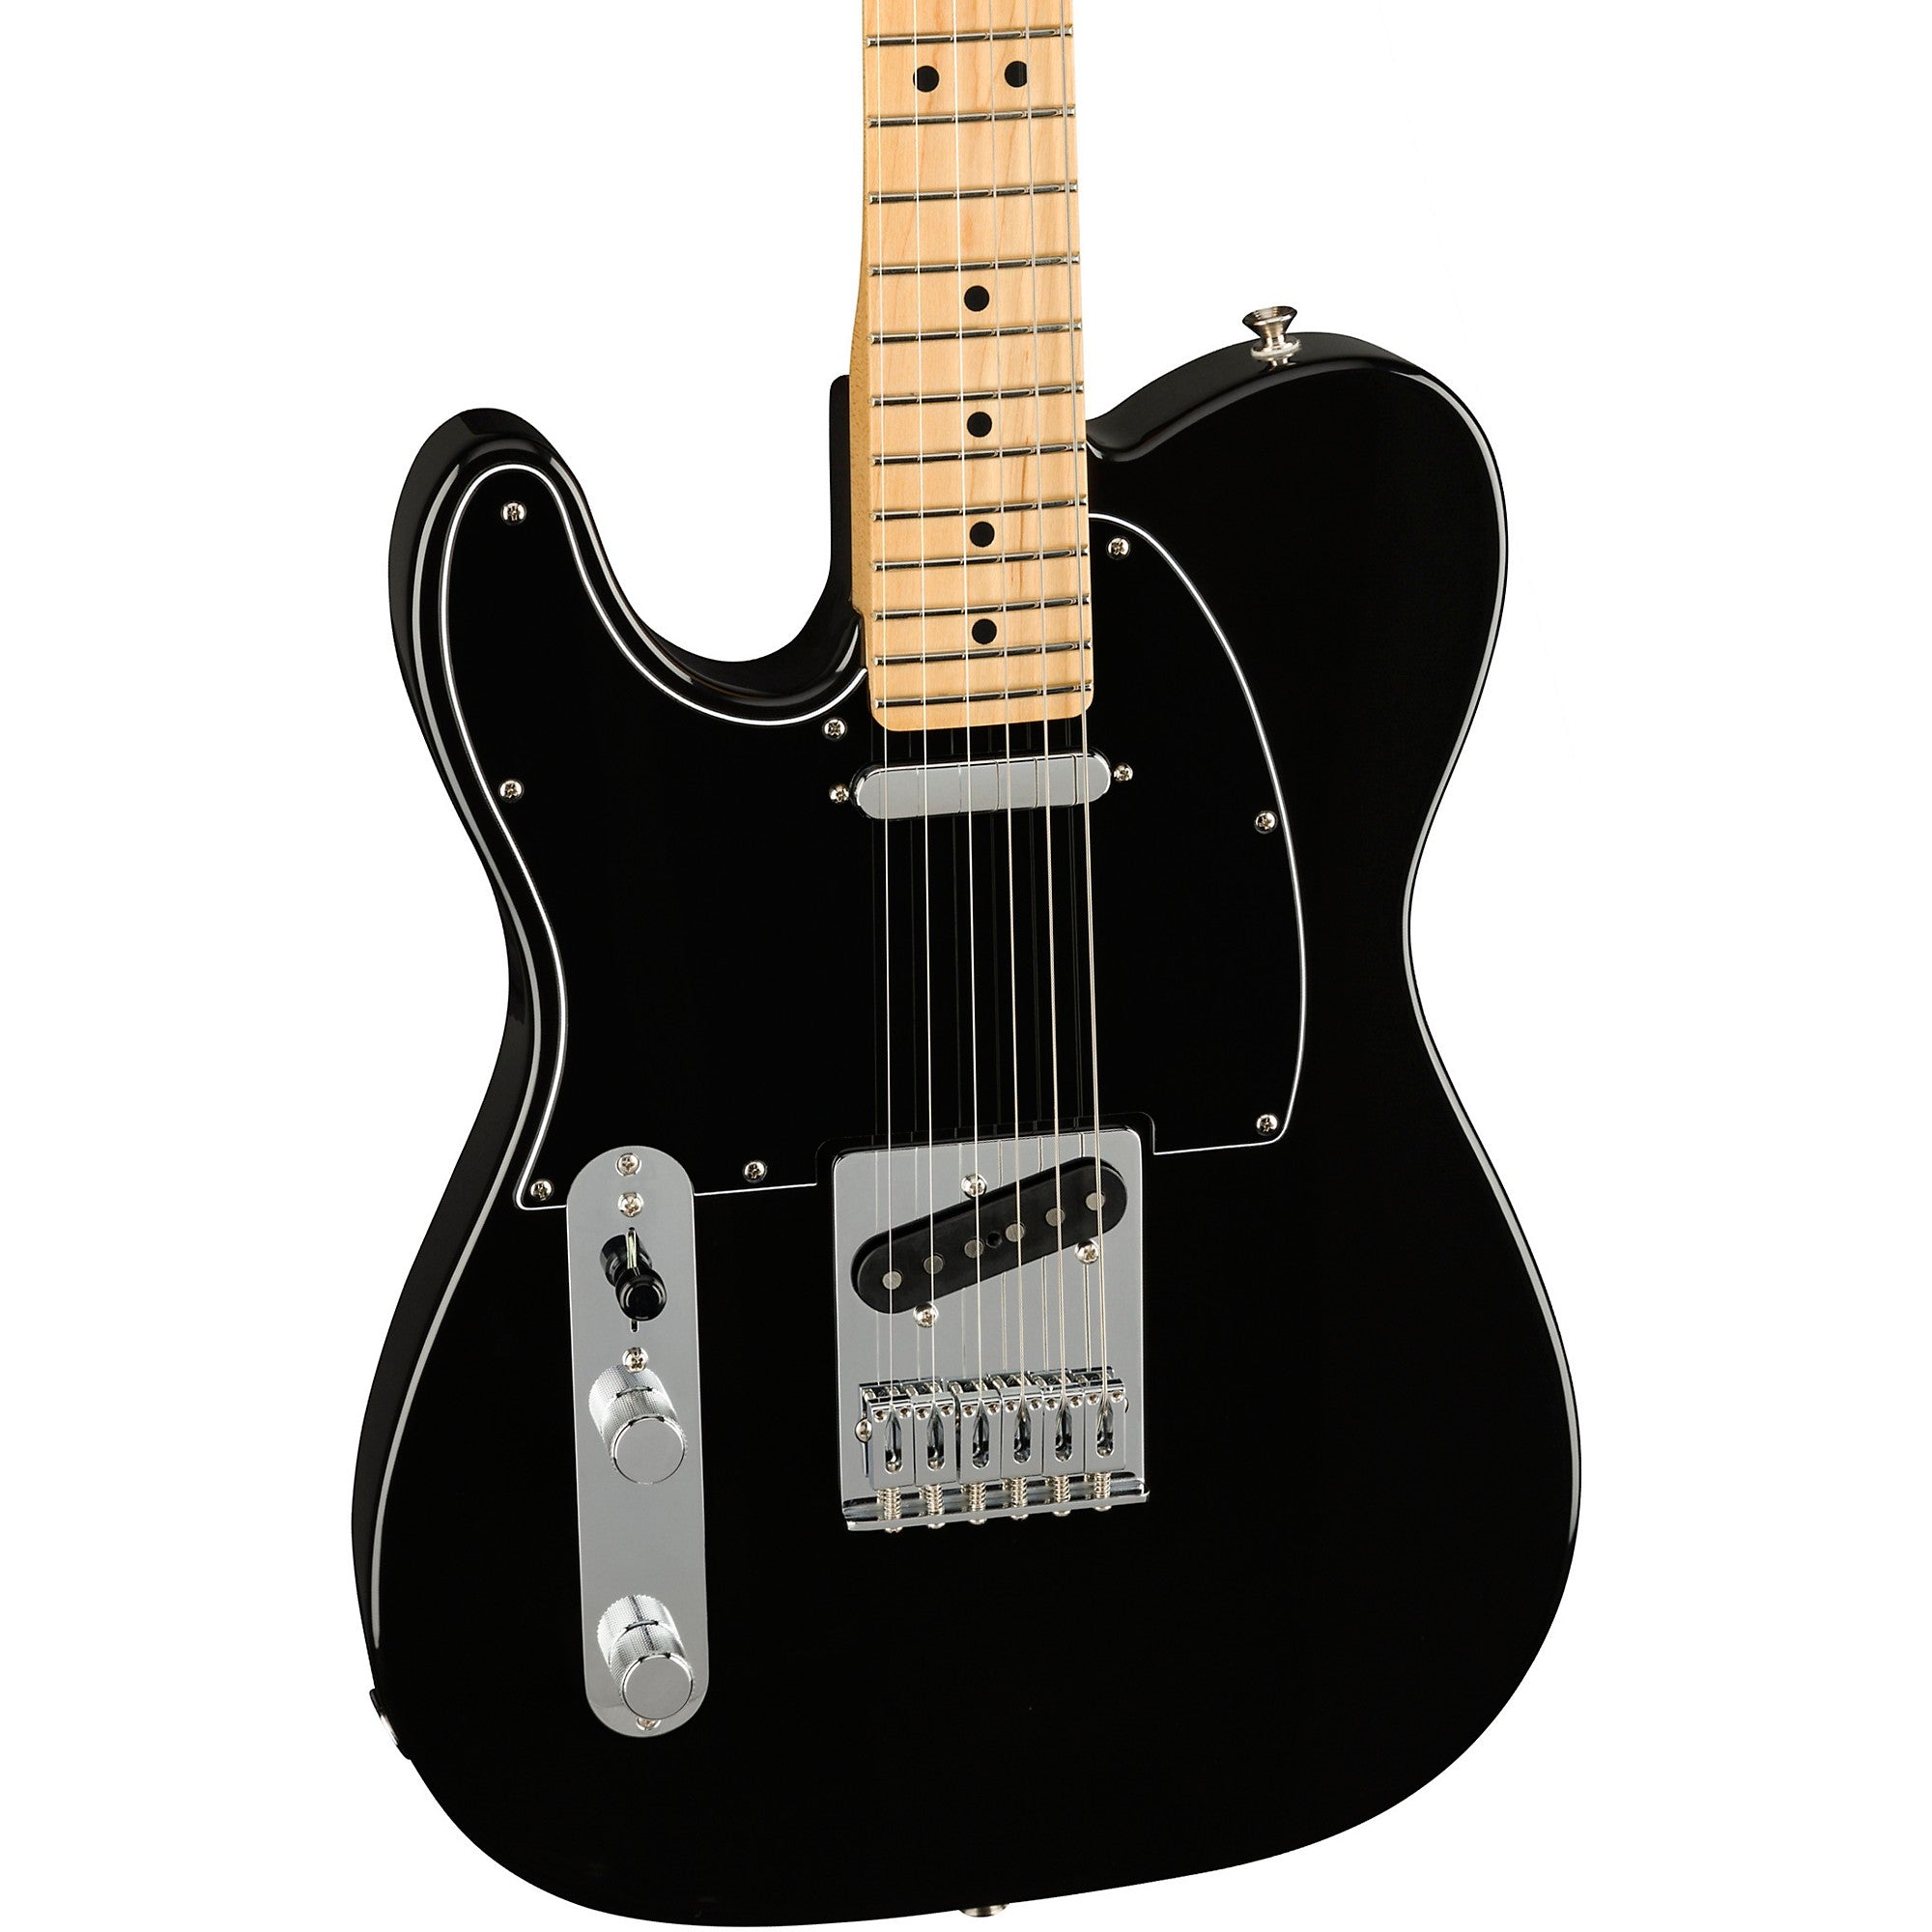 Fender Player Telecaster Left-Handed Electric Guitar, Maple FB, Black